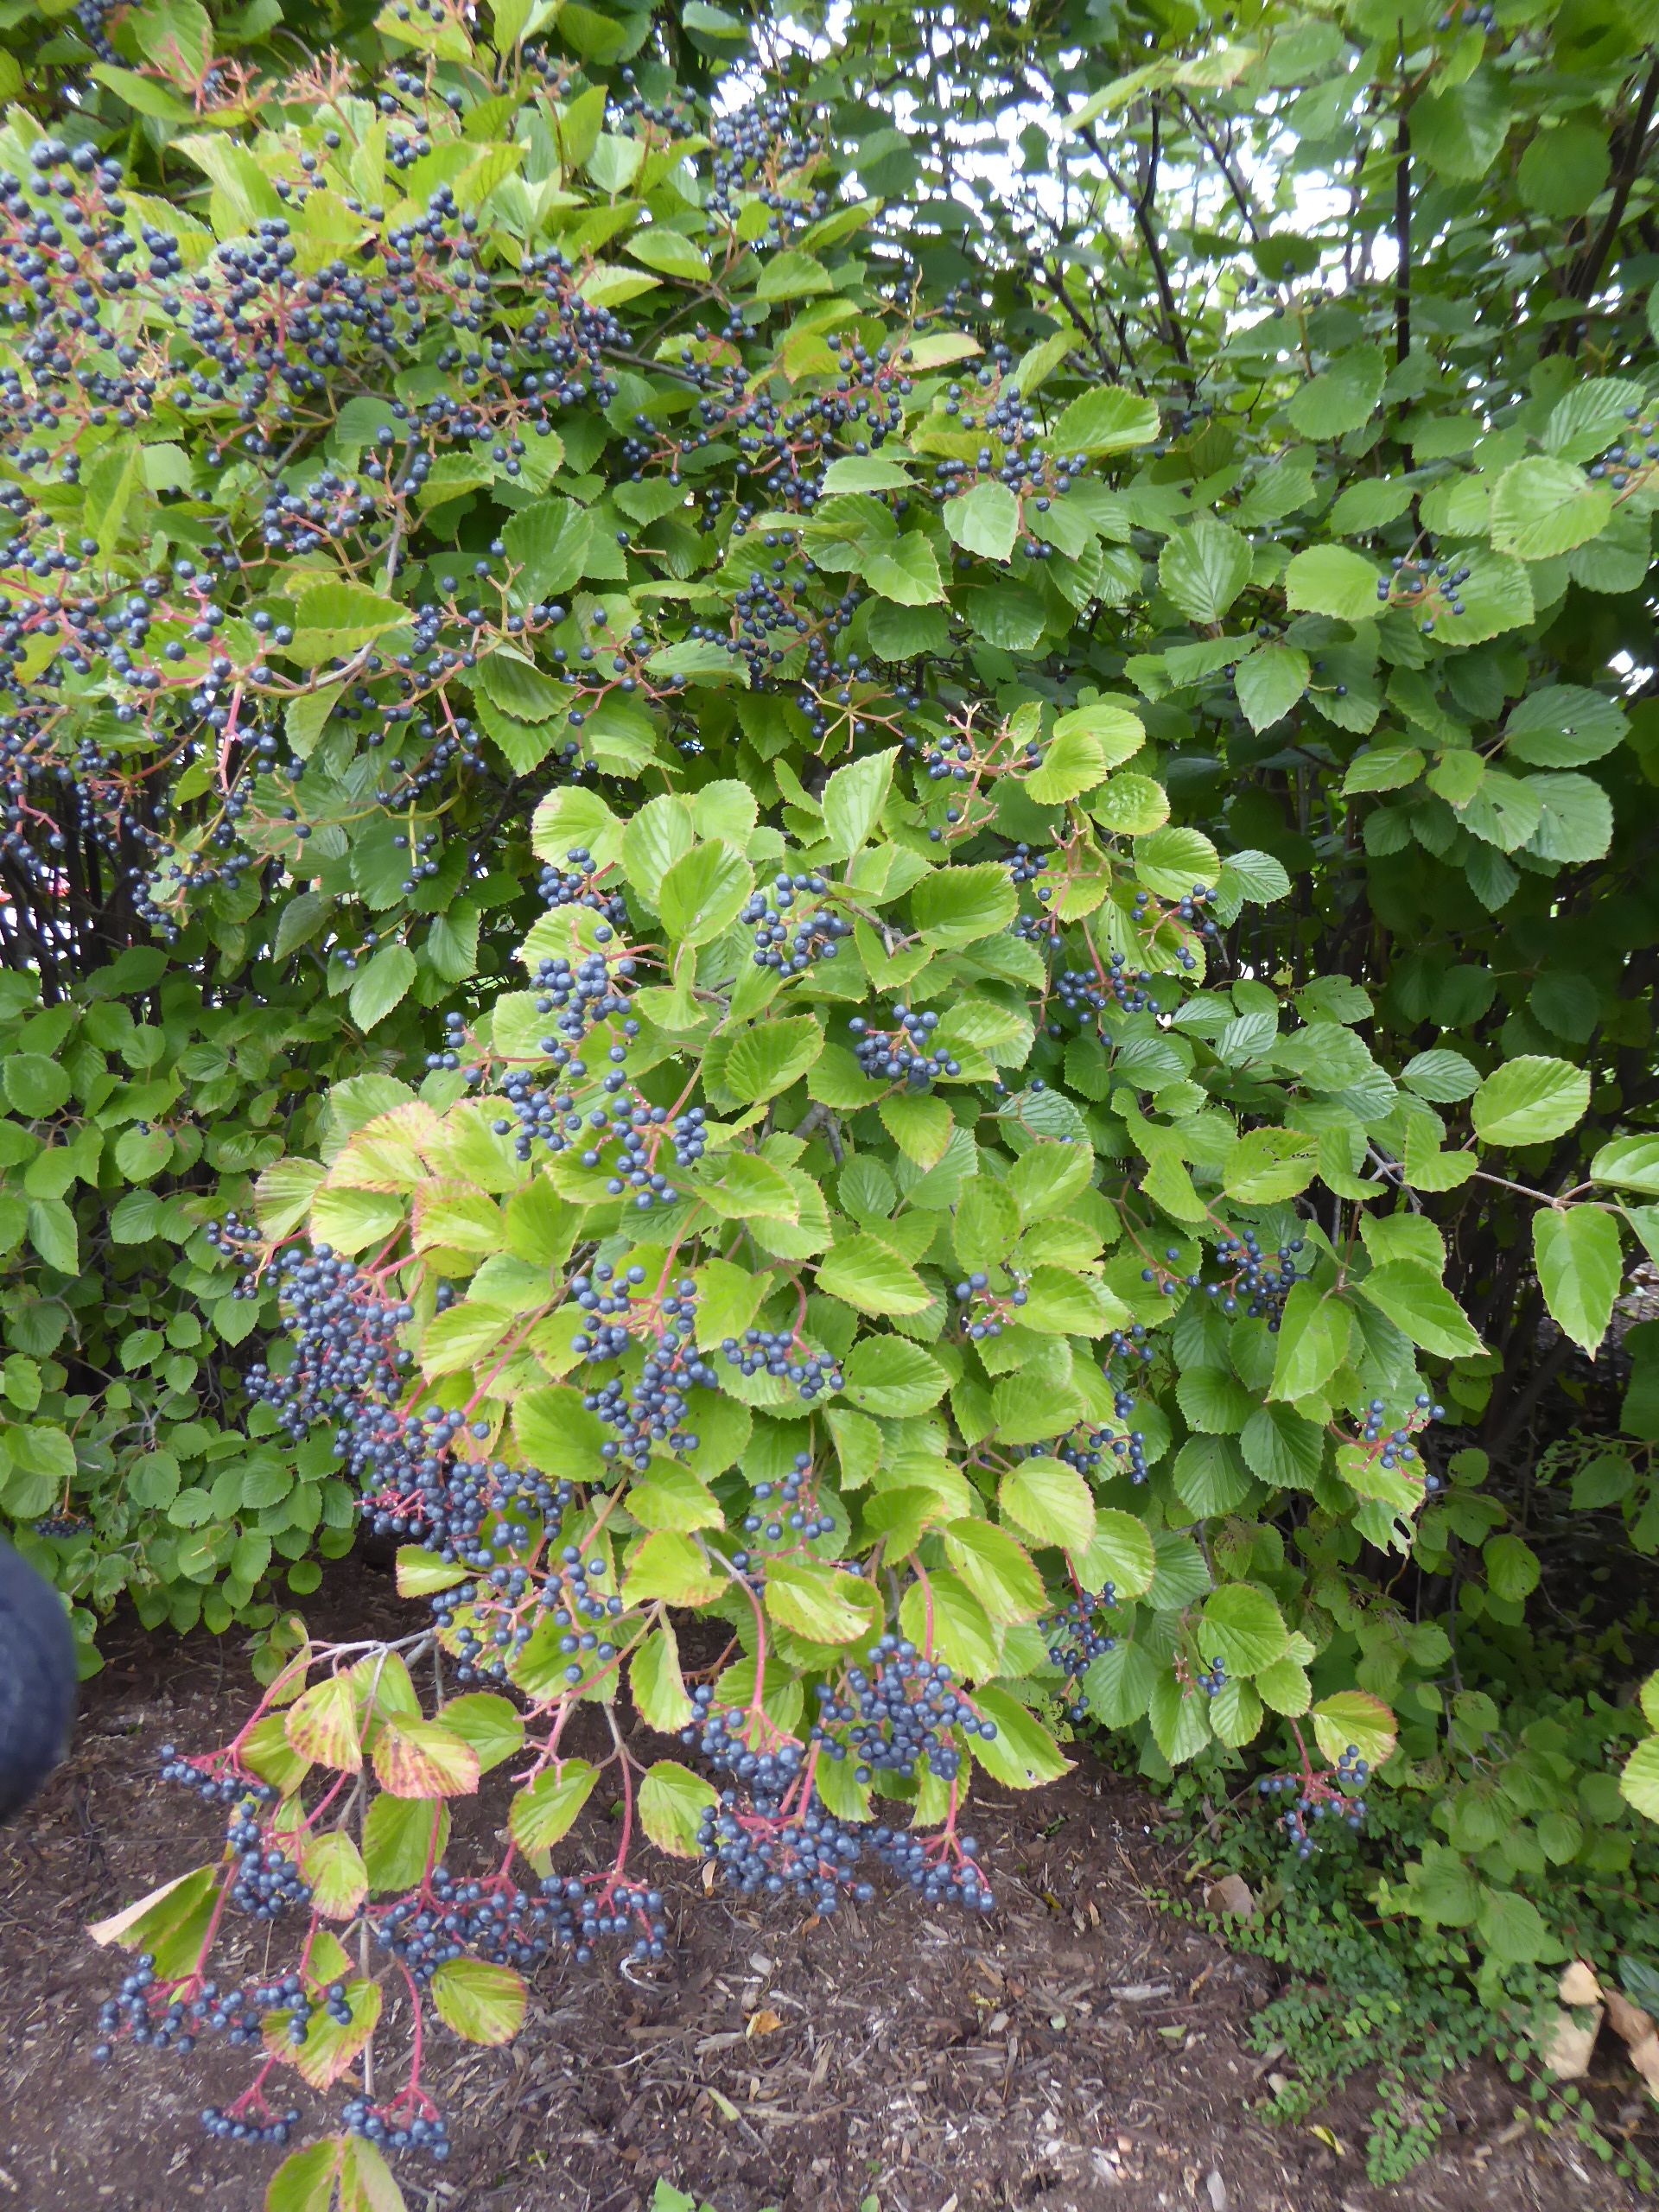 images/plants/viburnum/vib-northern-burgundy/vib-northern-burgundy-0004.jpg